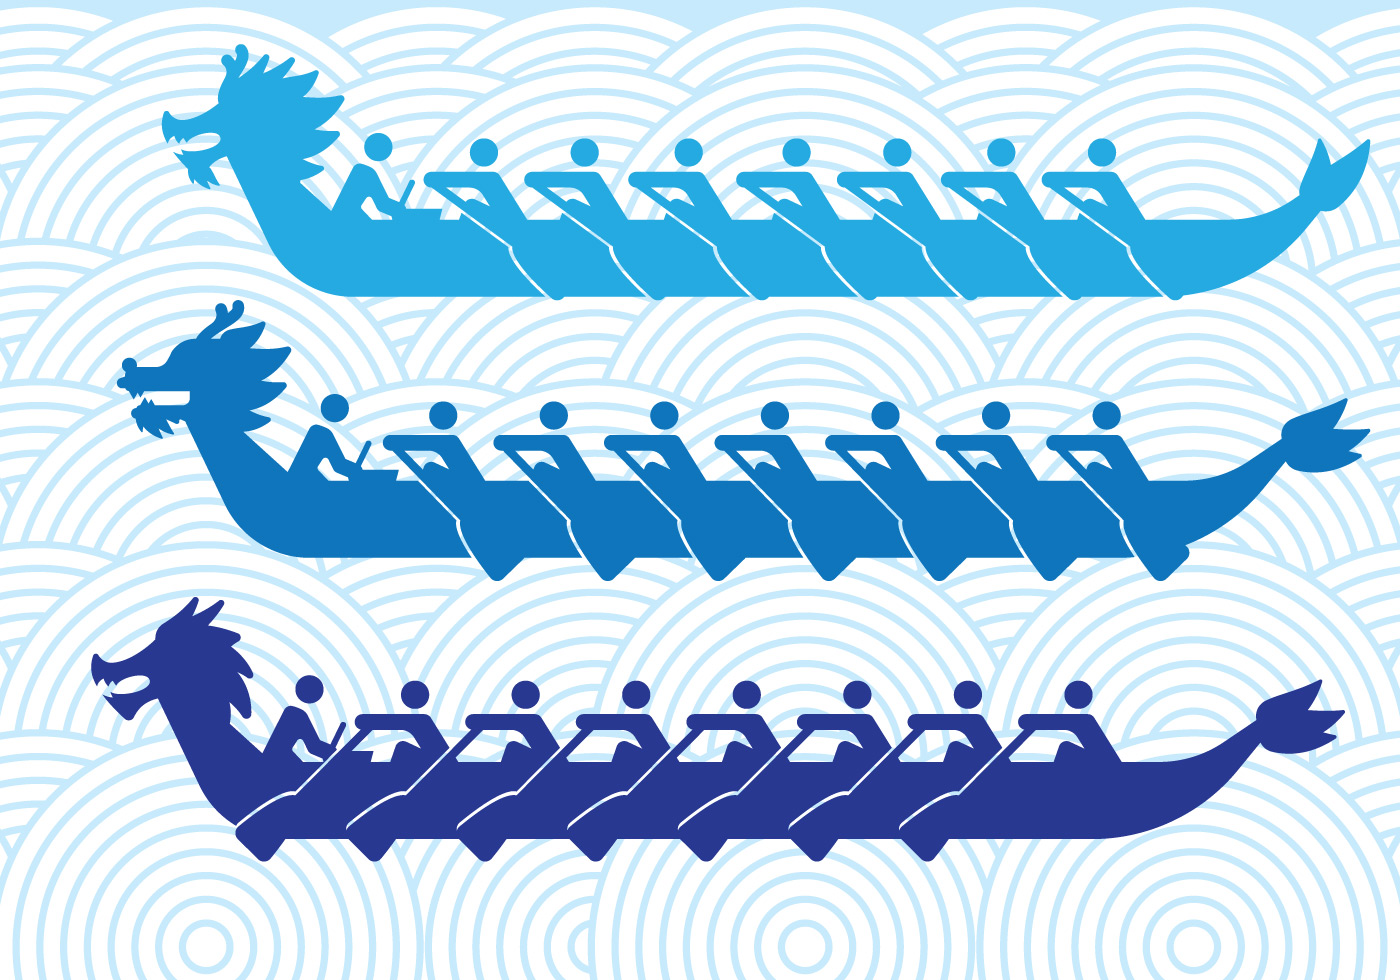 Dragon Boats Silhouettes - Download Free Vectors, Clipart Graphics & Vector Art